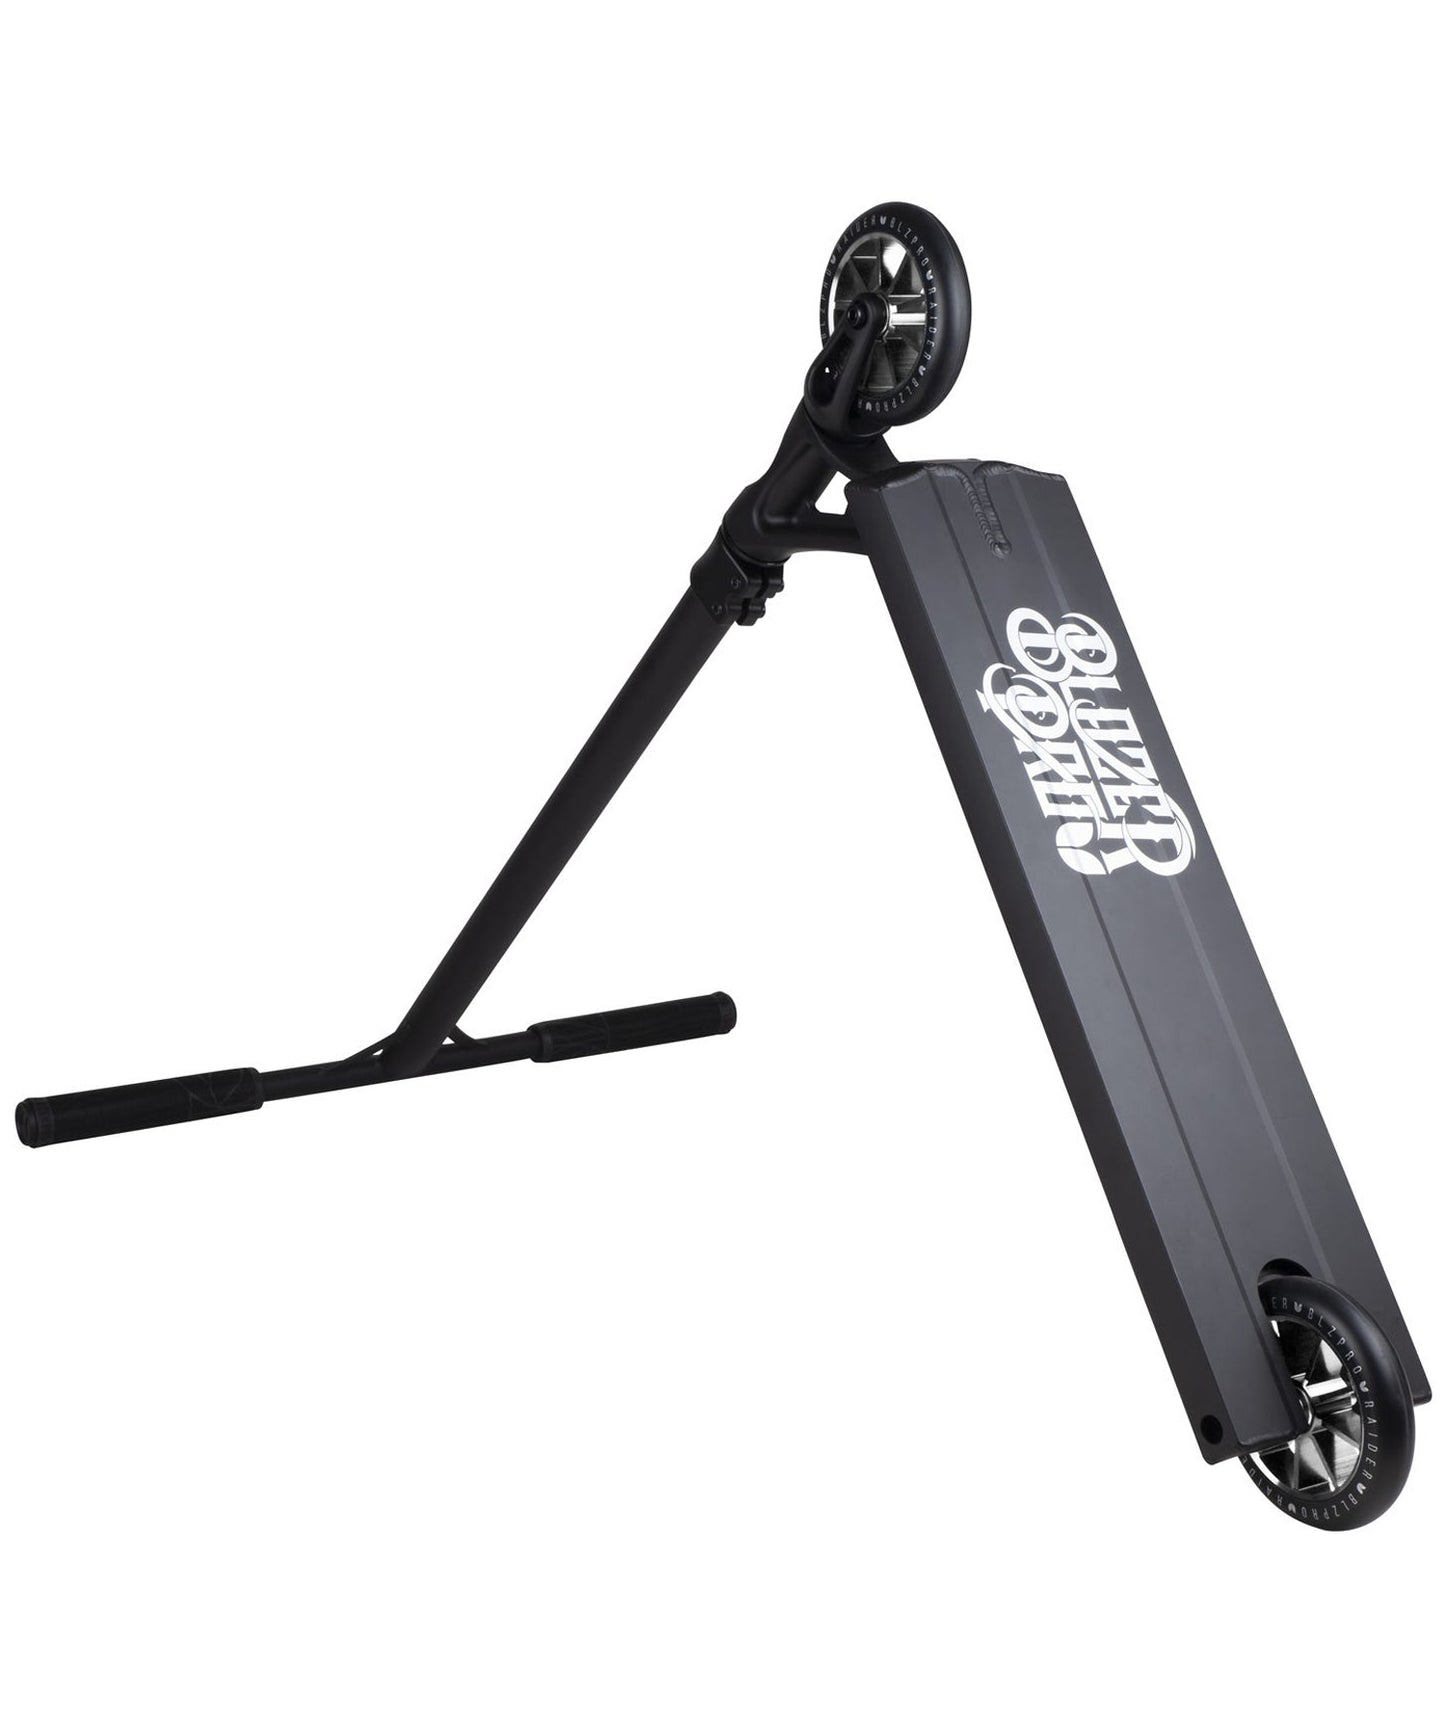 blazer-pro-scooter-completo-raider-color-negro-plata-aluminio-de-calidad-robusto-y-ligero-a-la-vez-gama-alta-totalmente-profesional.